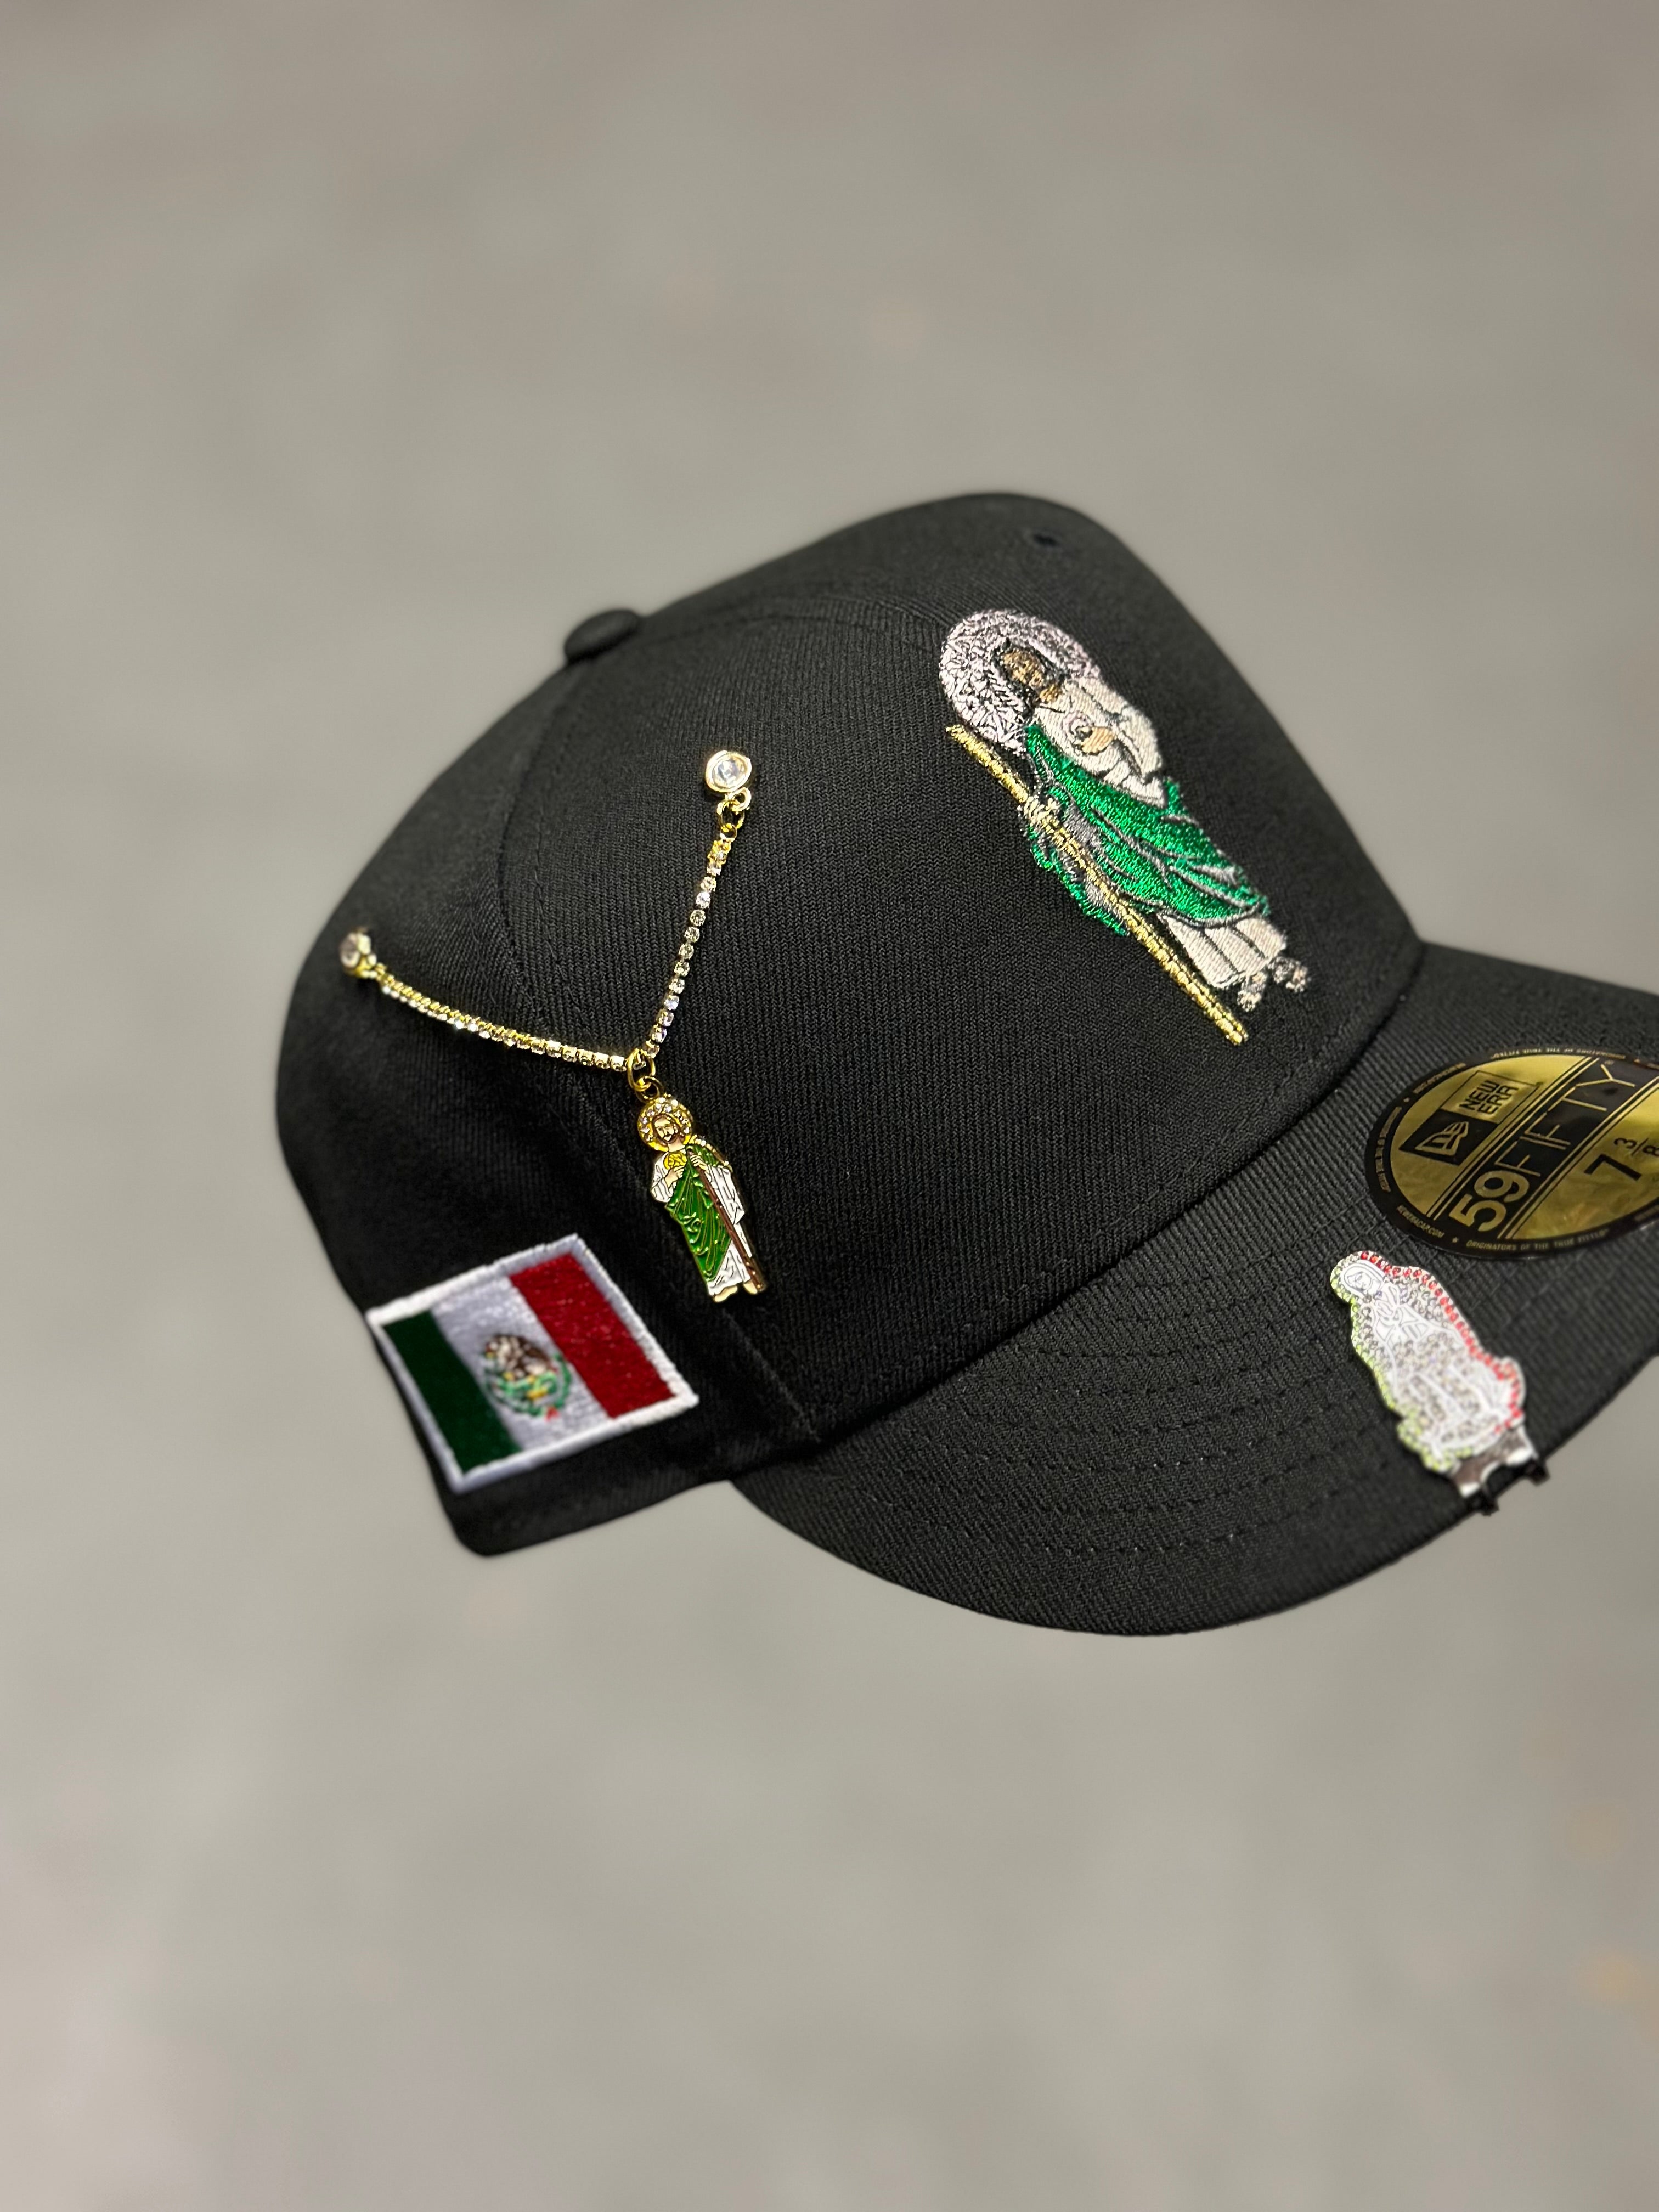 NEW ERA EXCLUSIVE 59FIFTY BLACK "SAN JUDAS TADEO" W/ MEXICO FLAG SIDE PATCH